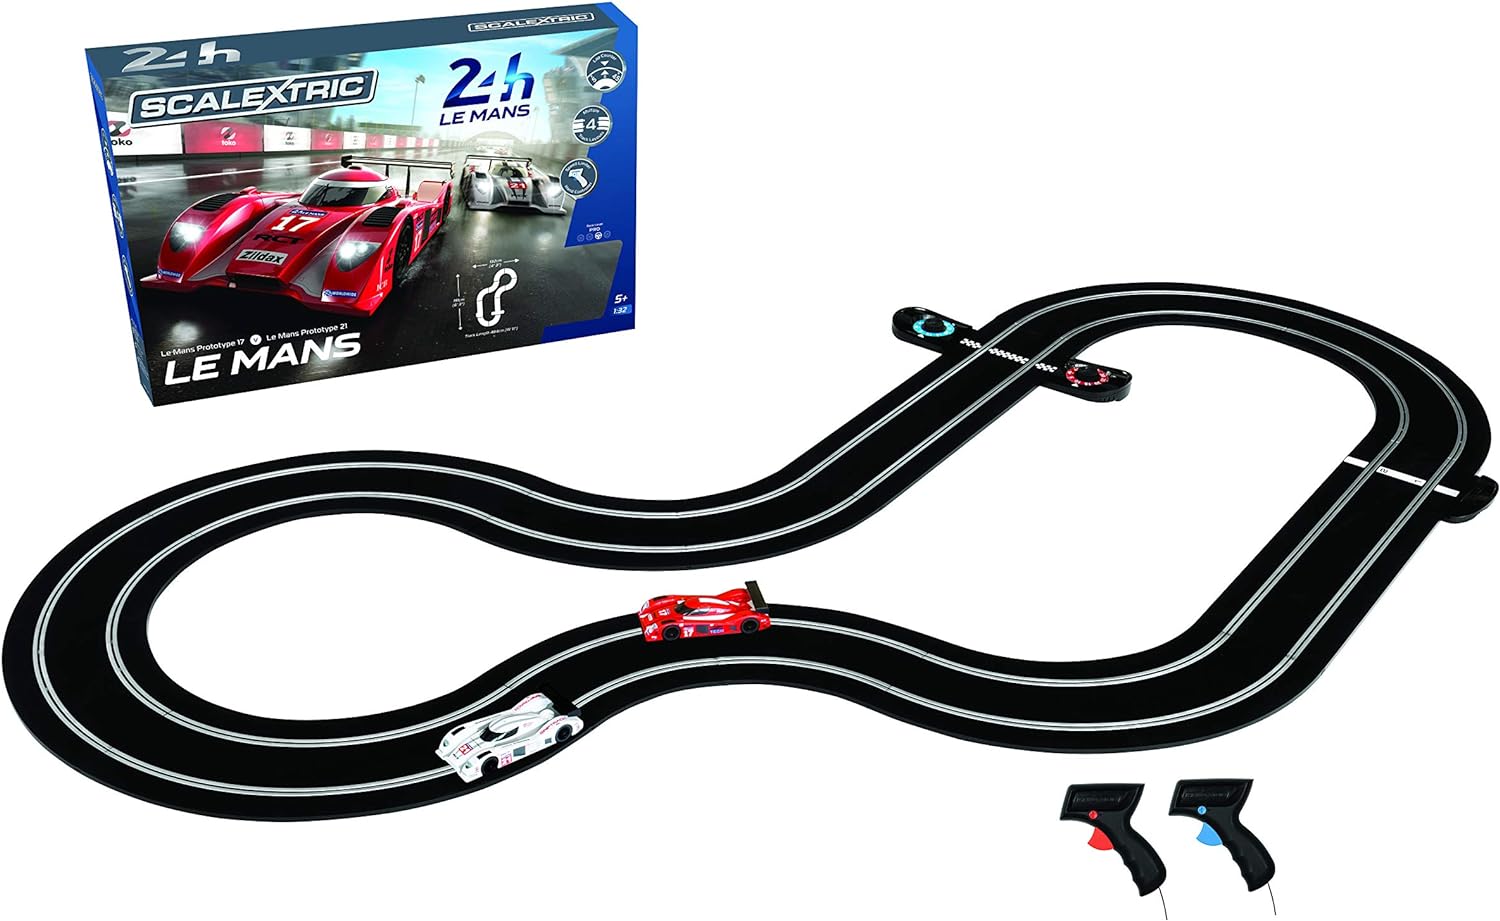 Scalextric C1368T 24 Hr Le Mans Sports Cars Slot Car Analog 1:32 Race Track Set, Red/ White/ Black $116.78 Amazon